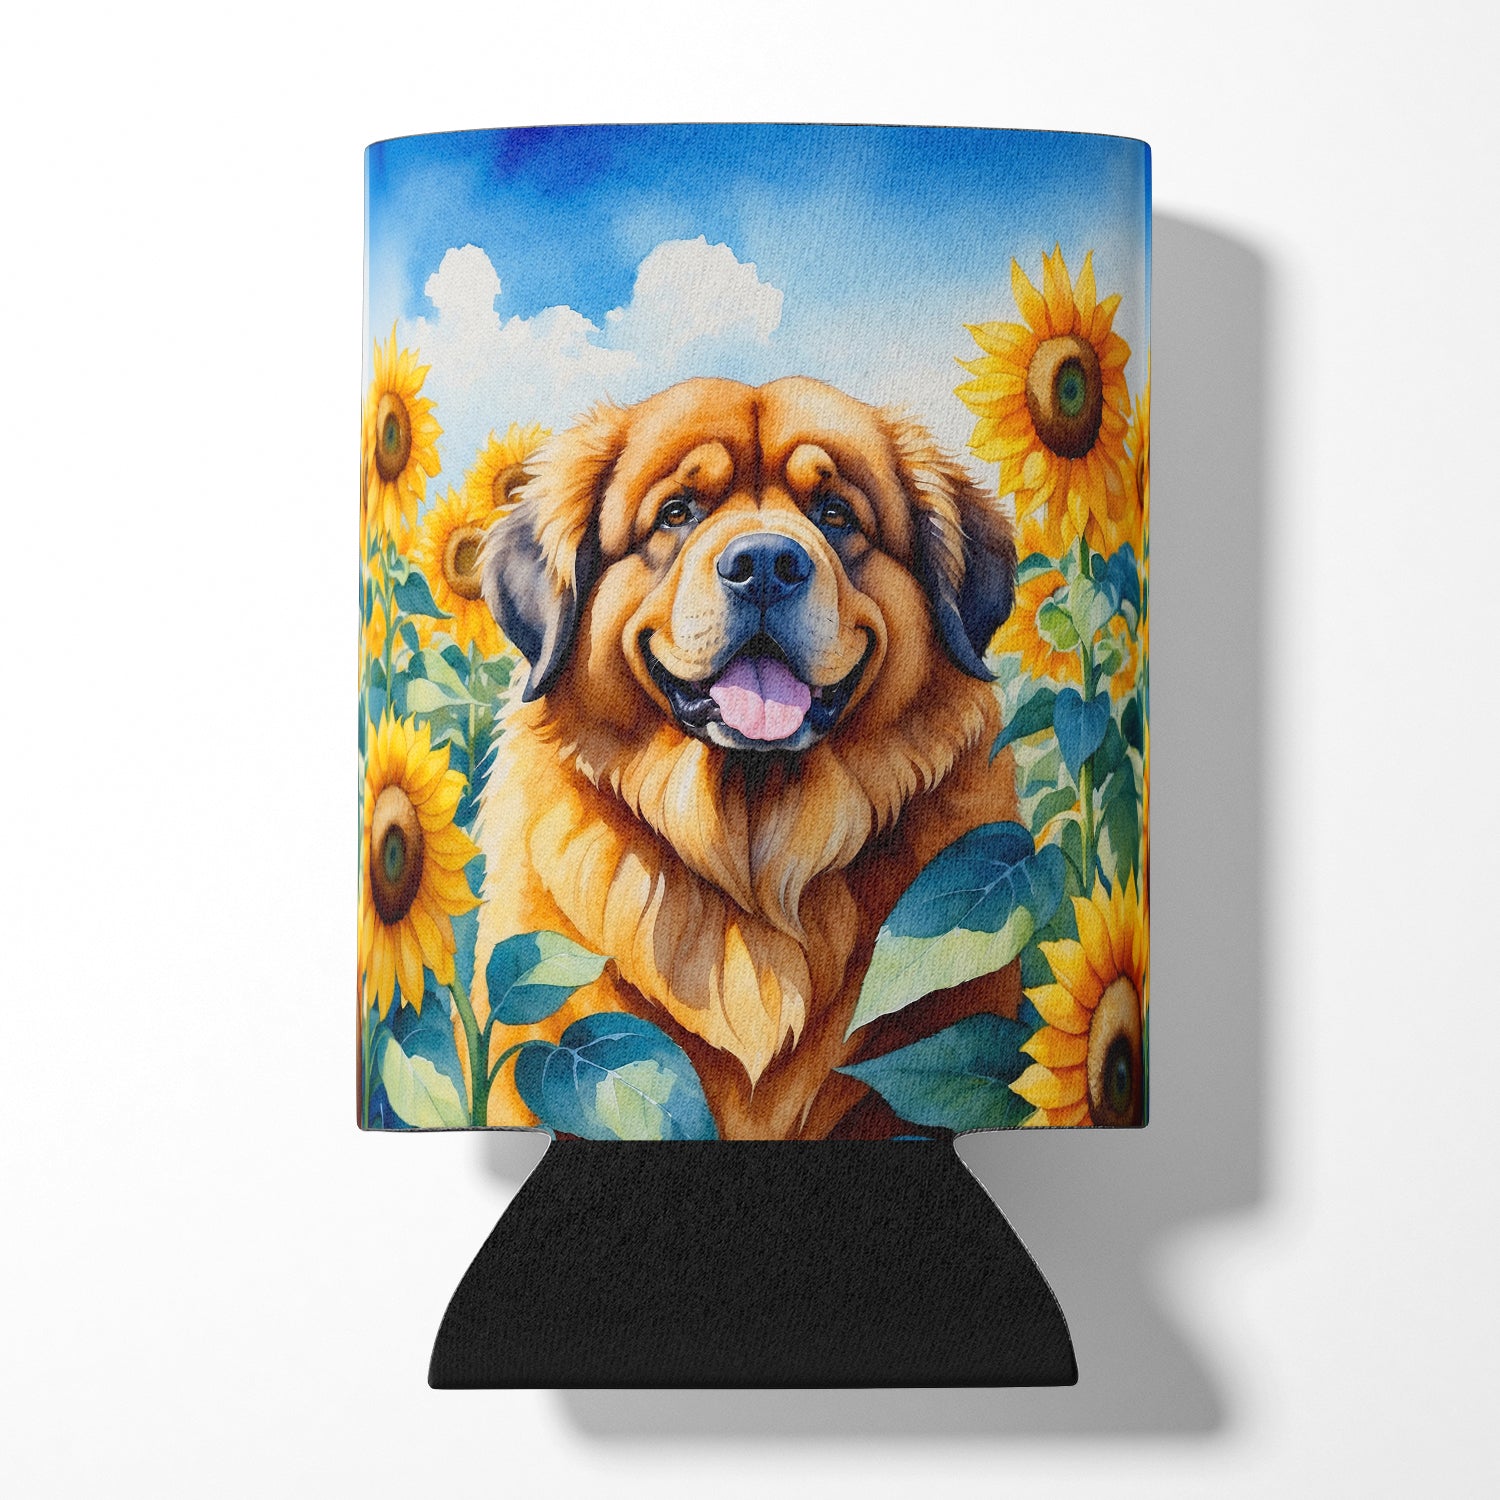 Buy this Tibetan Mastiff in Sunflowers Can or Bottle Hugger